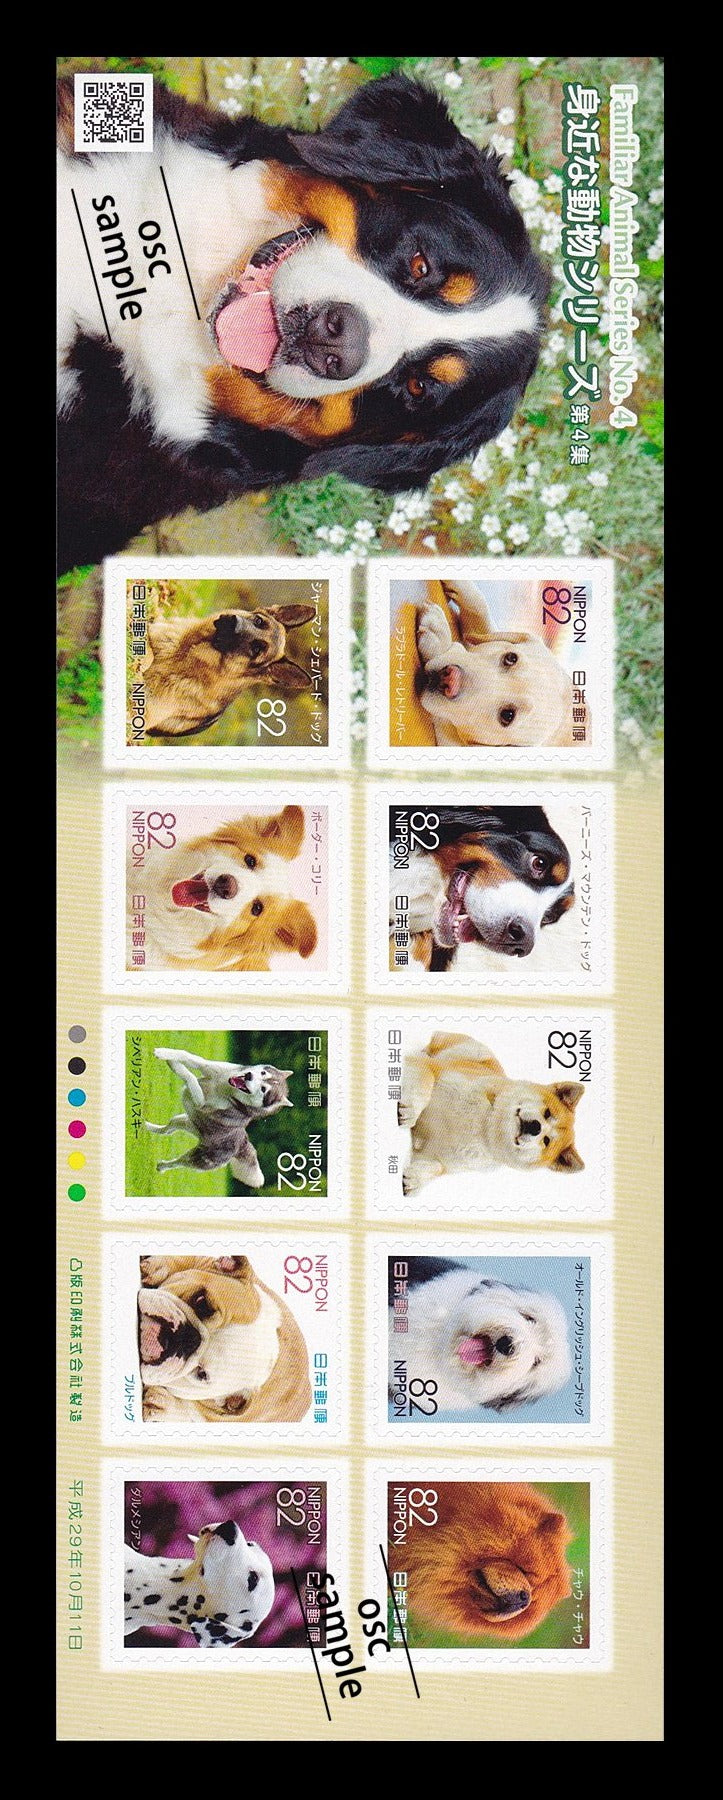 Familiar Animal Series Vol.4 (Dog Ver. / 82 yen)